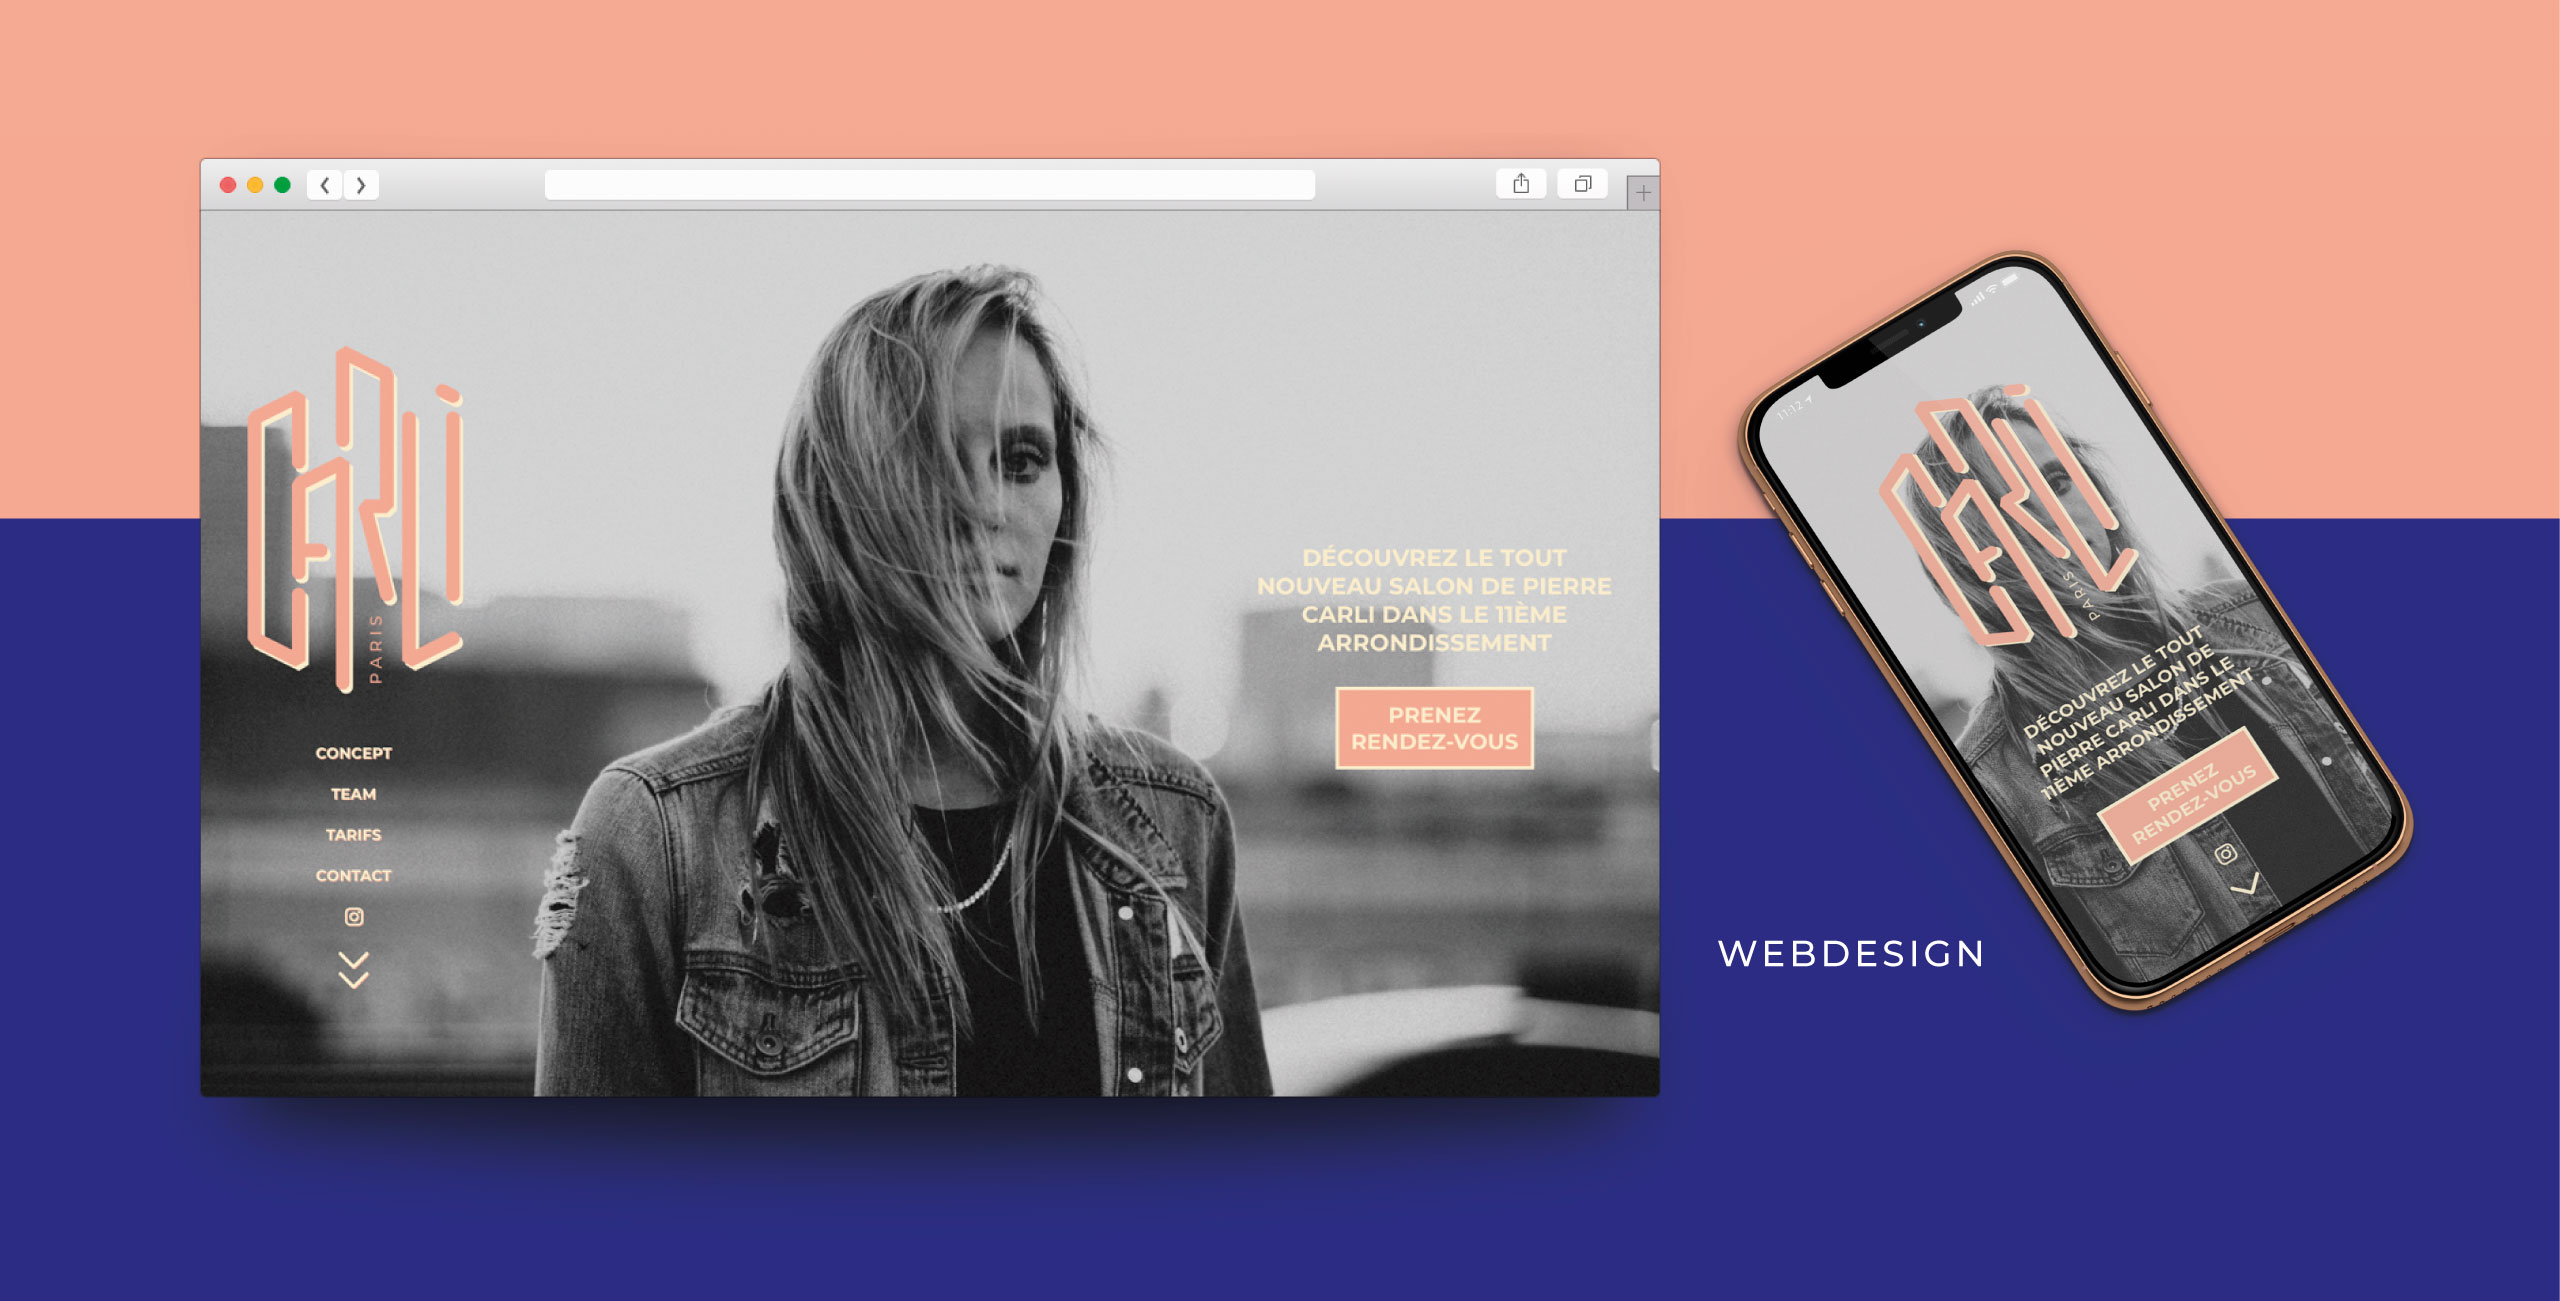 Carli.paris webdesign